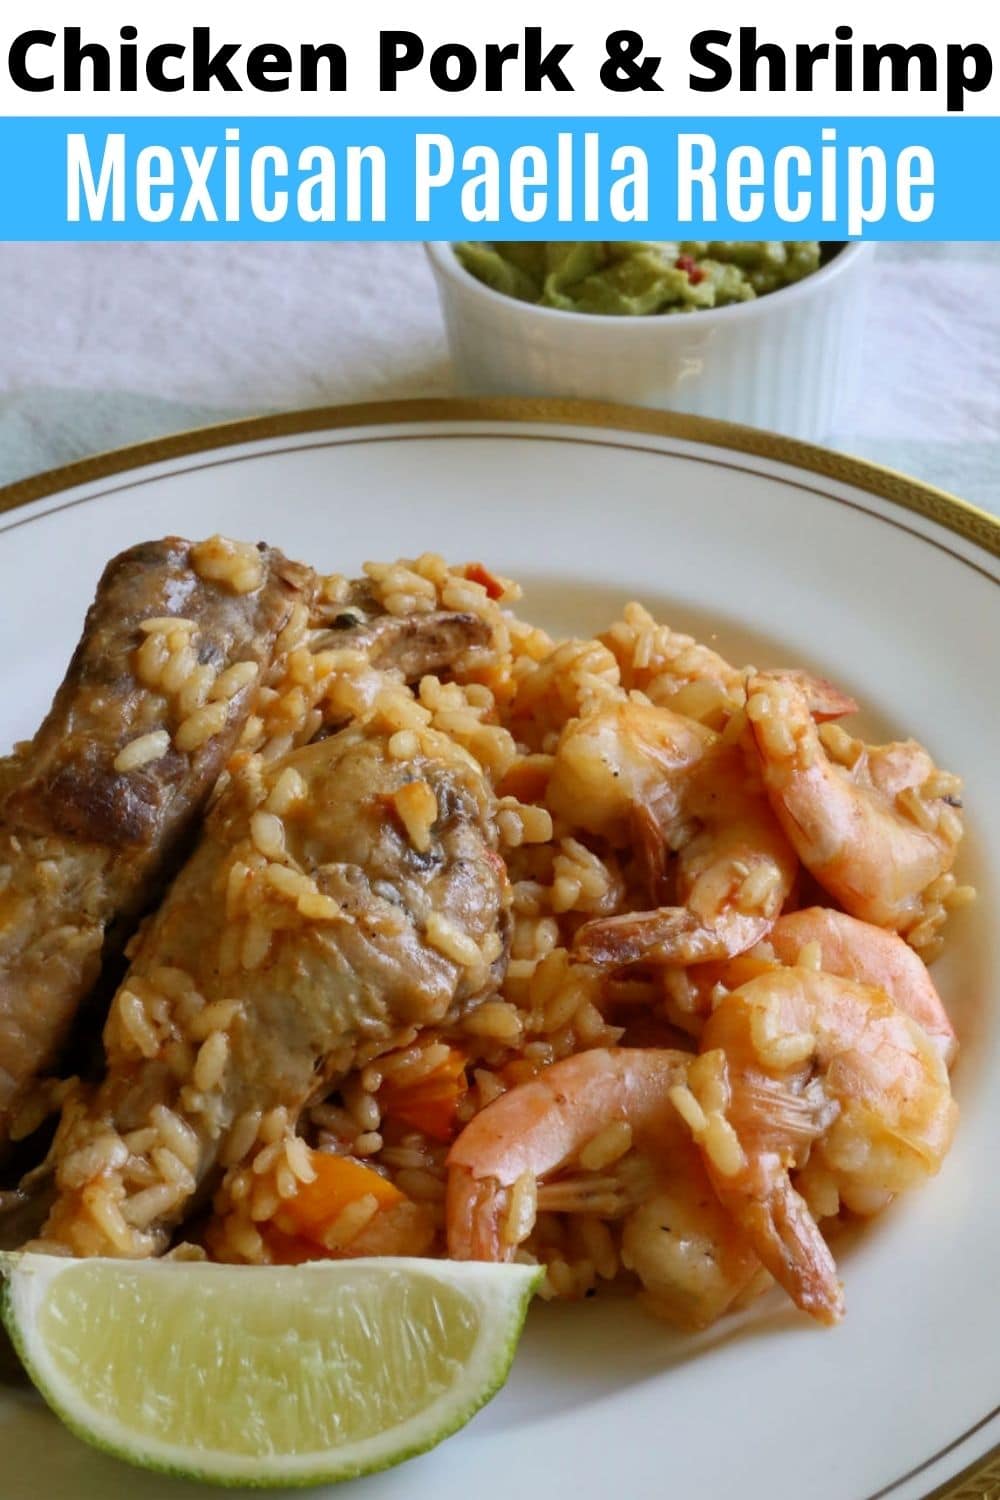 Chicken Pork & Shrimp Mexican Paella Recipe - dobbernationLOVES